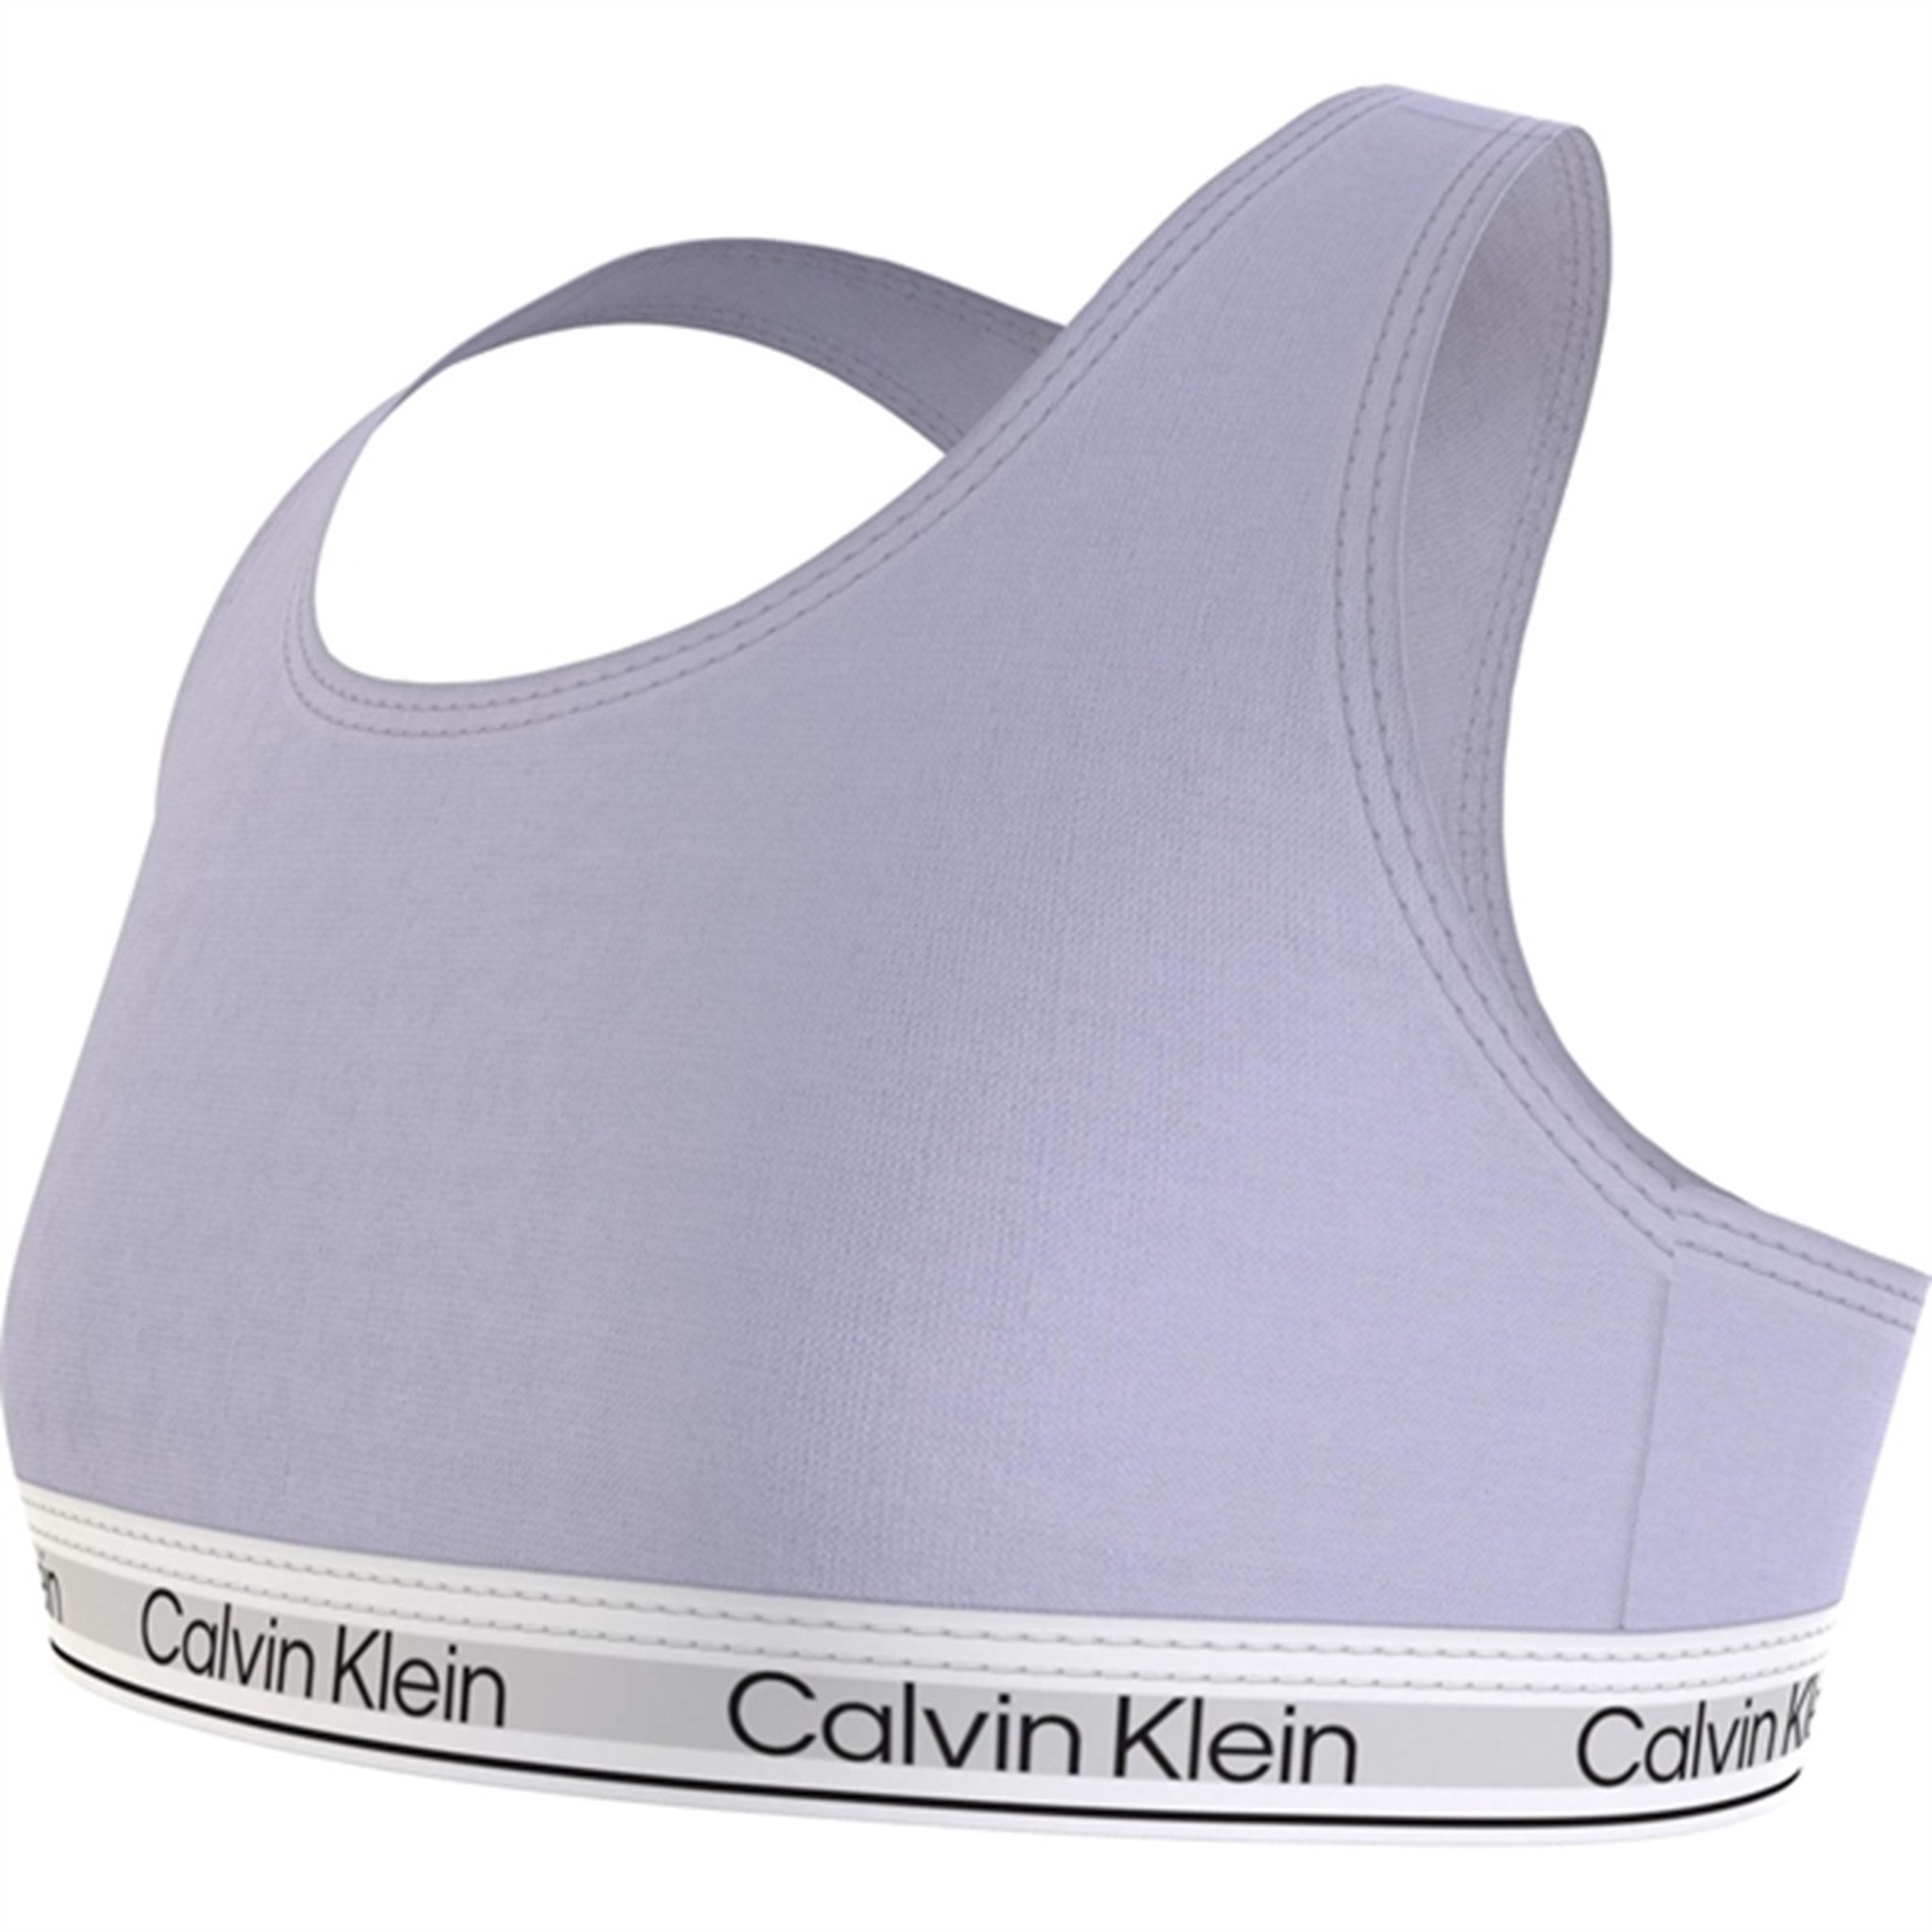 Calvin Klein Bralette 2-pack Lavendersplash/Pvh Black 2